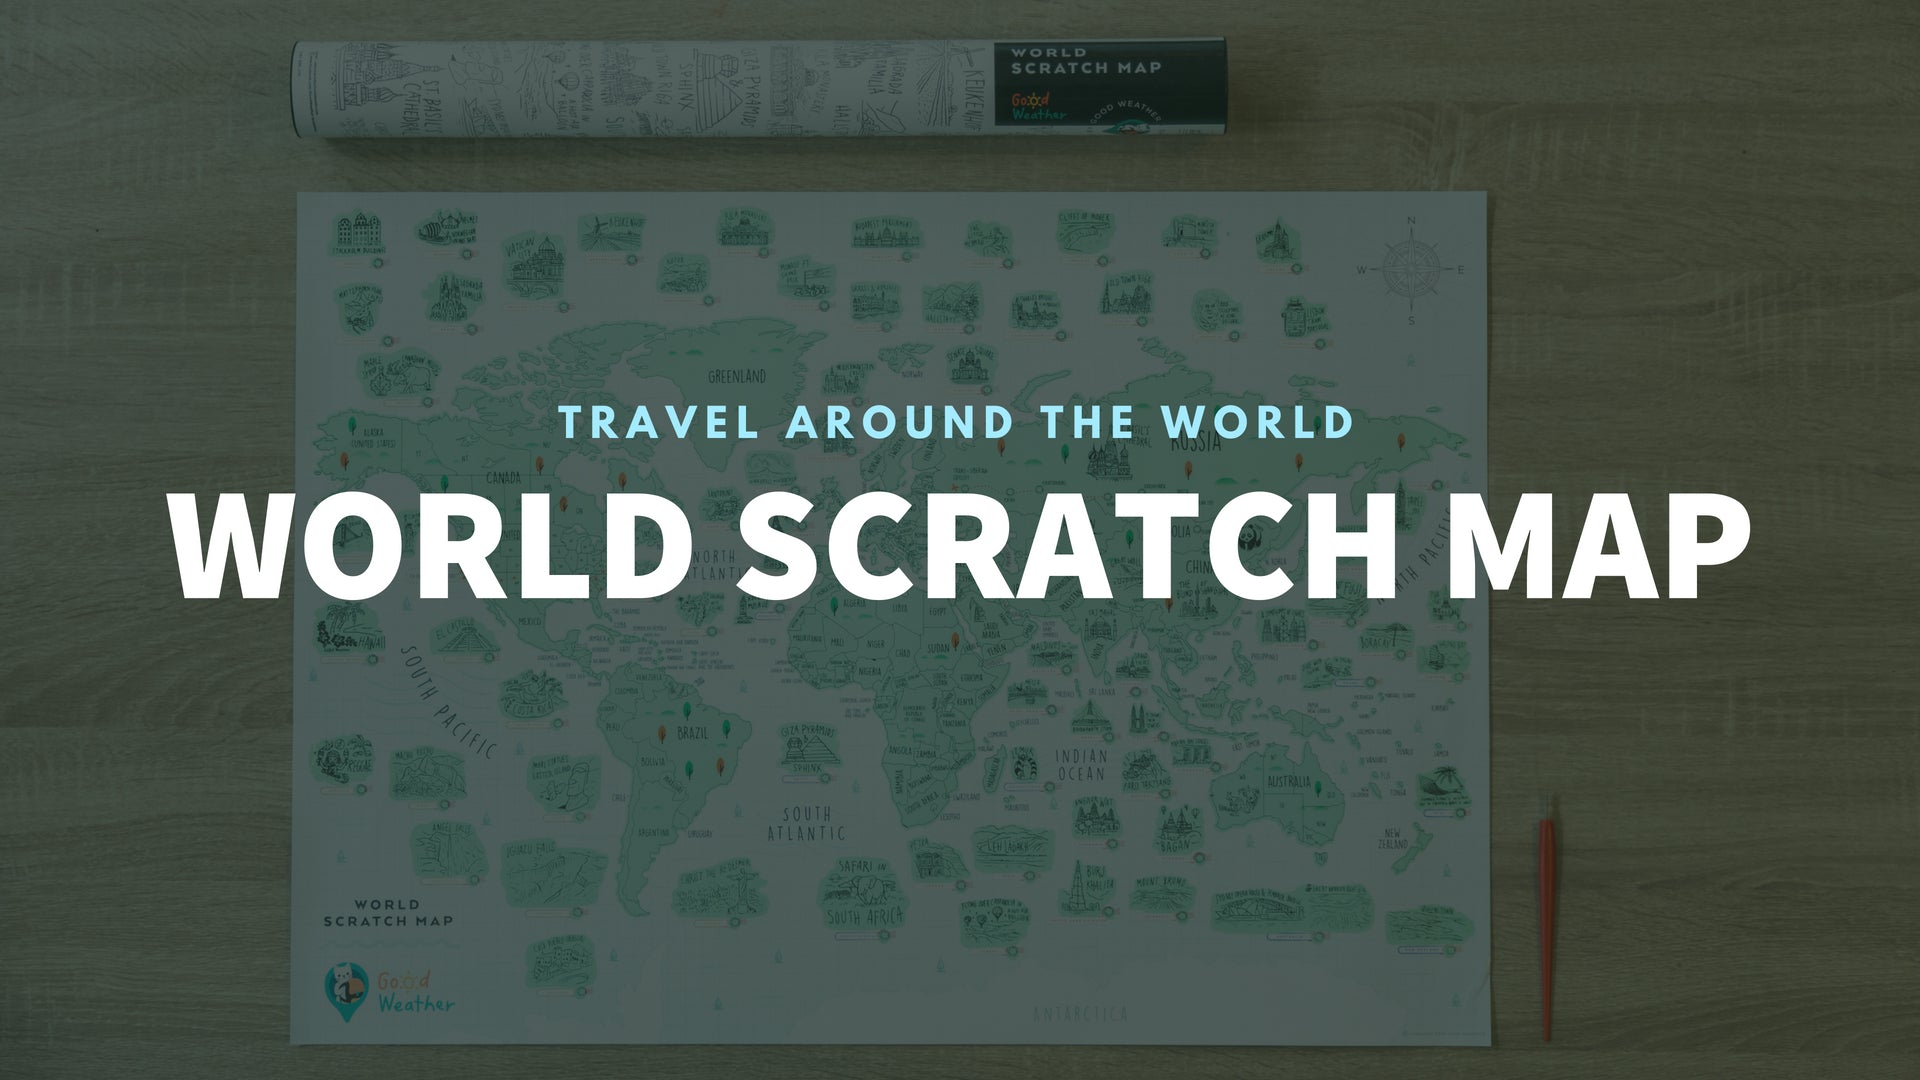 World scratch map - iMartCity 世界刮刮樂刮刮地圖 travel map world map deluxe map